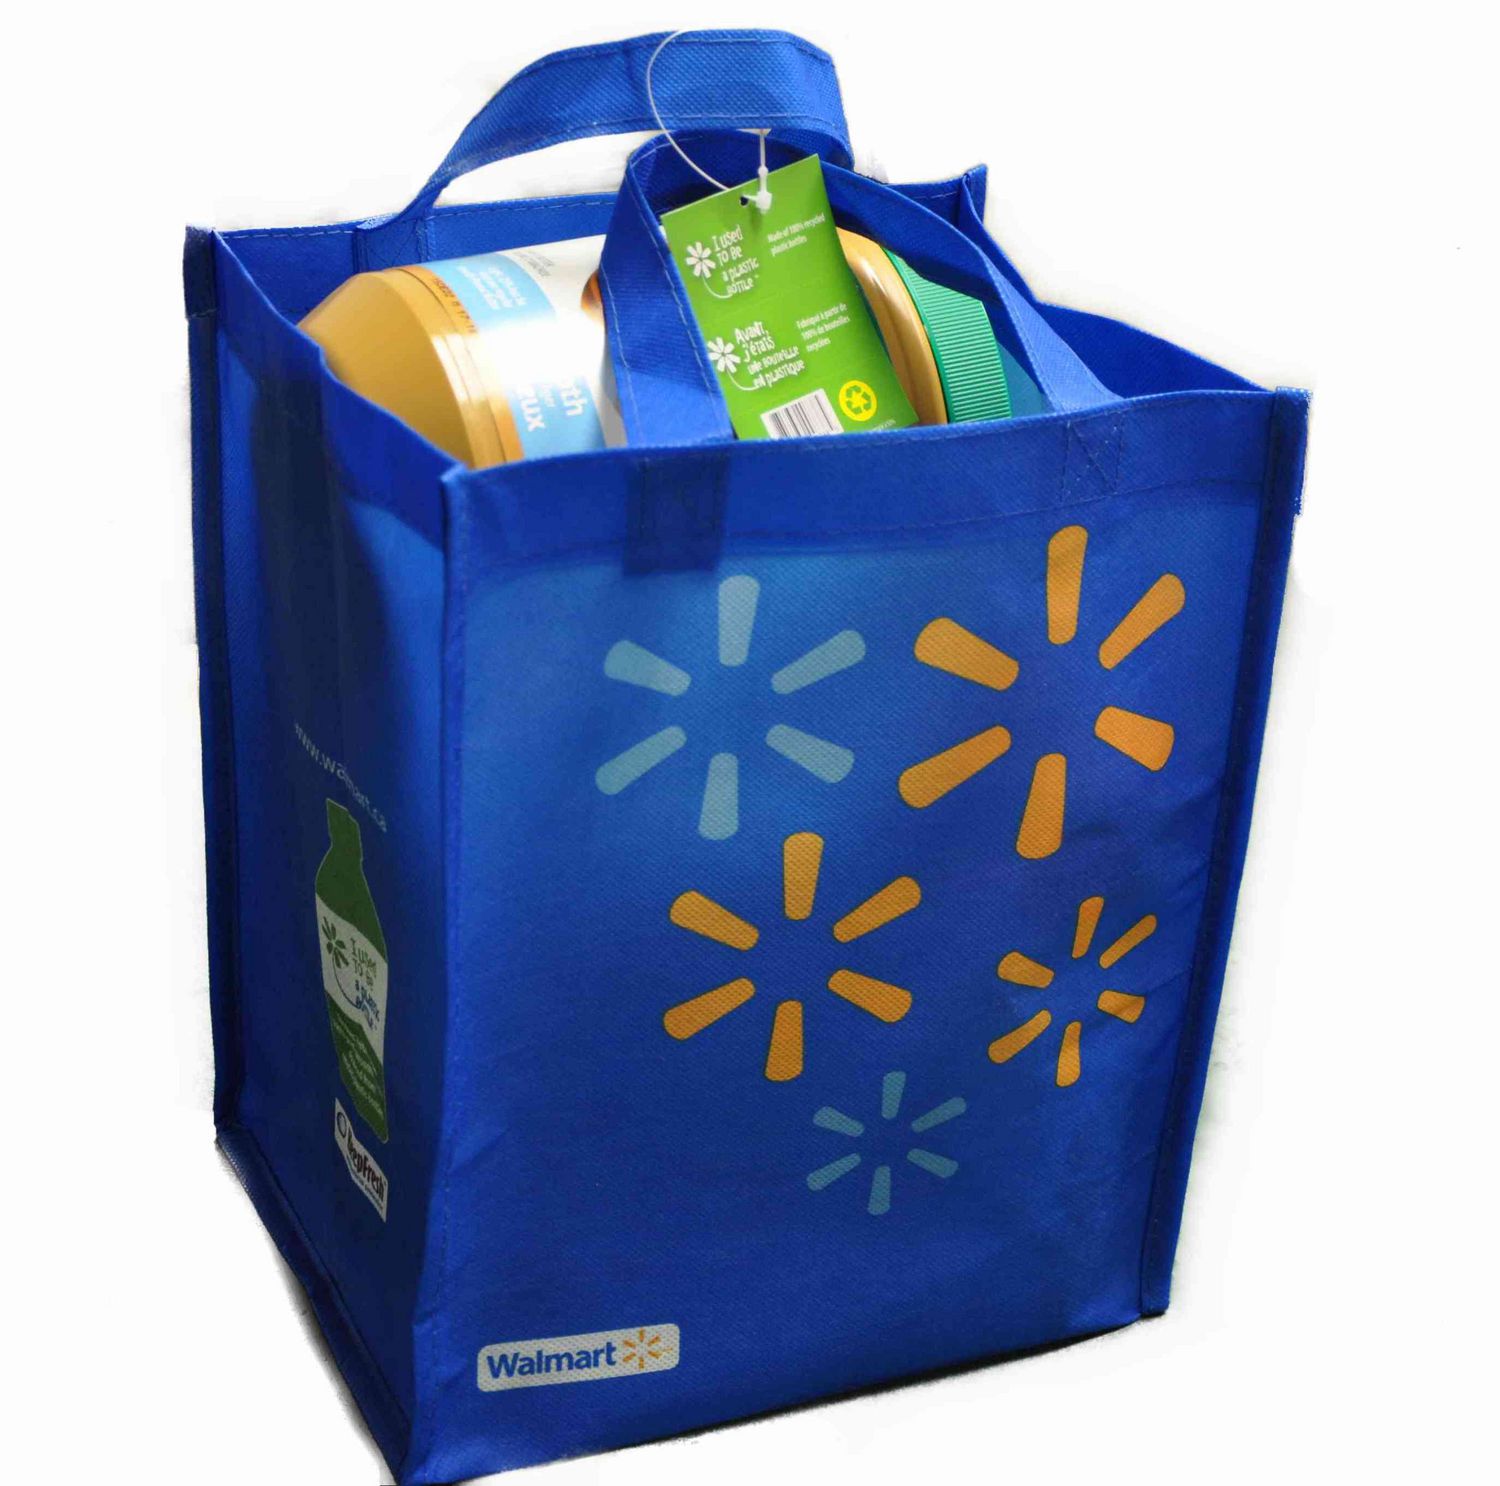 Walmart Reusable Insulated Polyethylene Grocery Bag, Blue